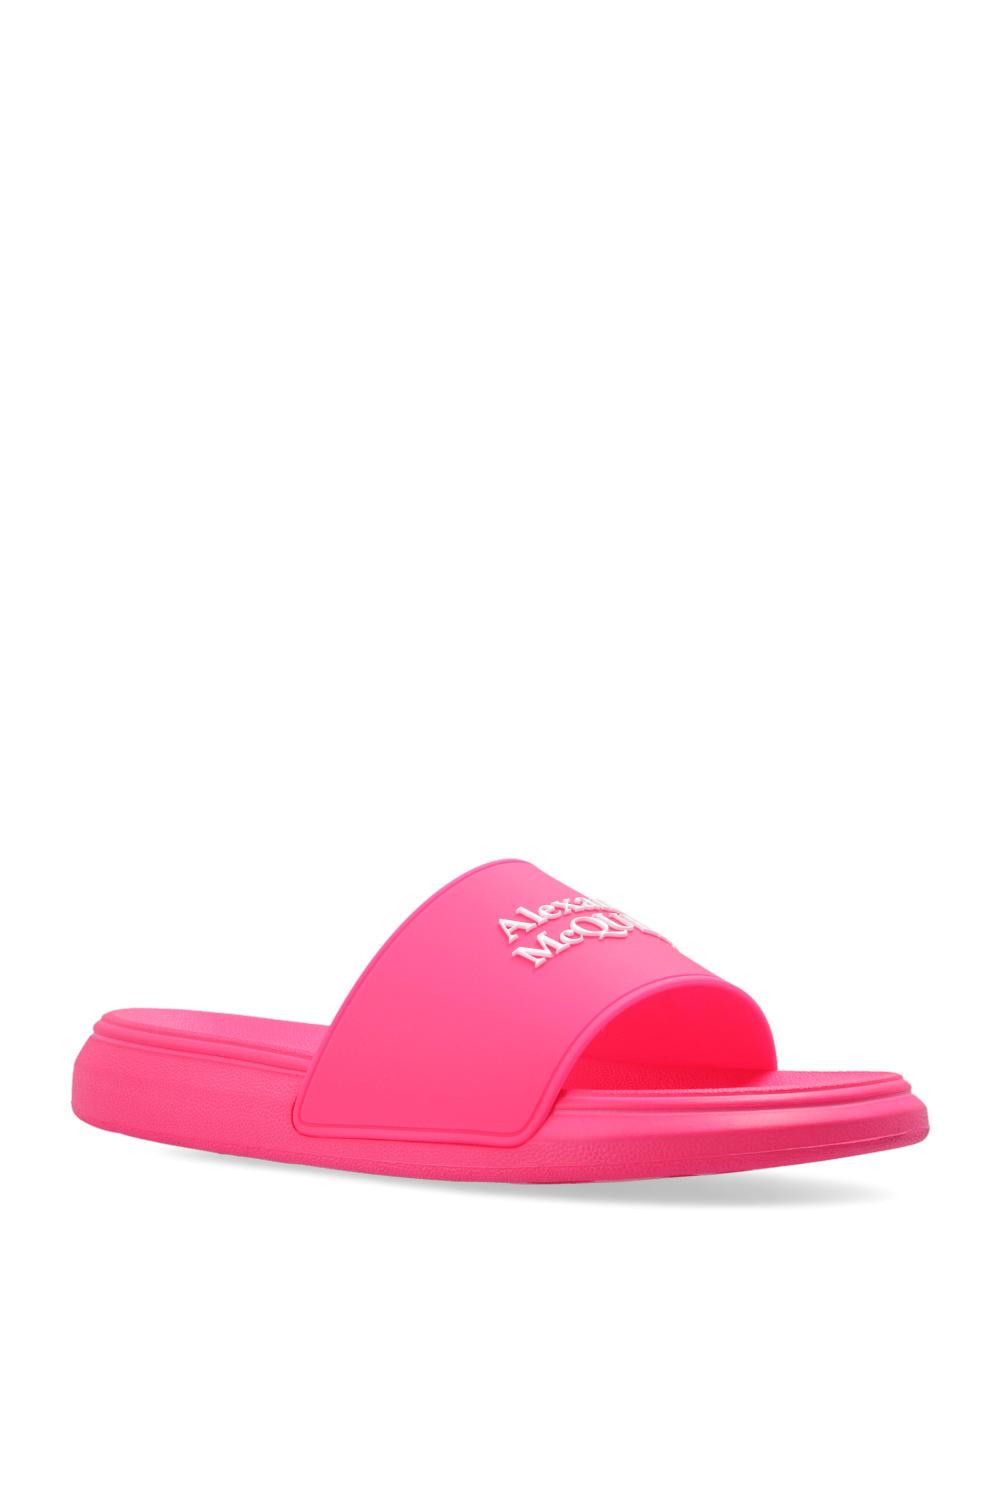 Alexander McQueen Rubber Slides With Logo in Pink | Lyst